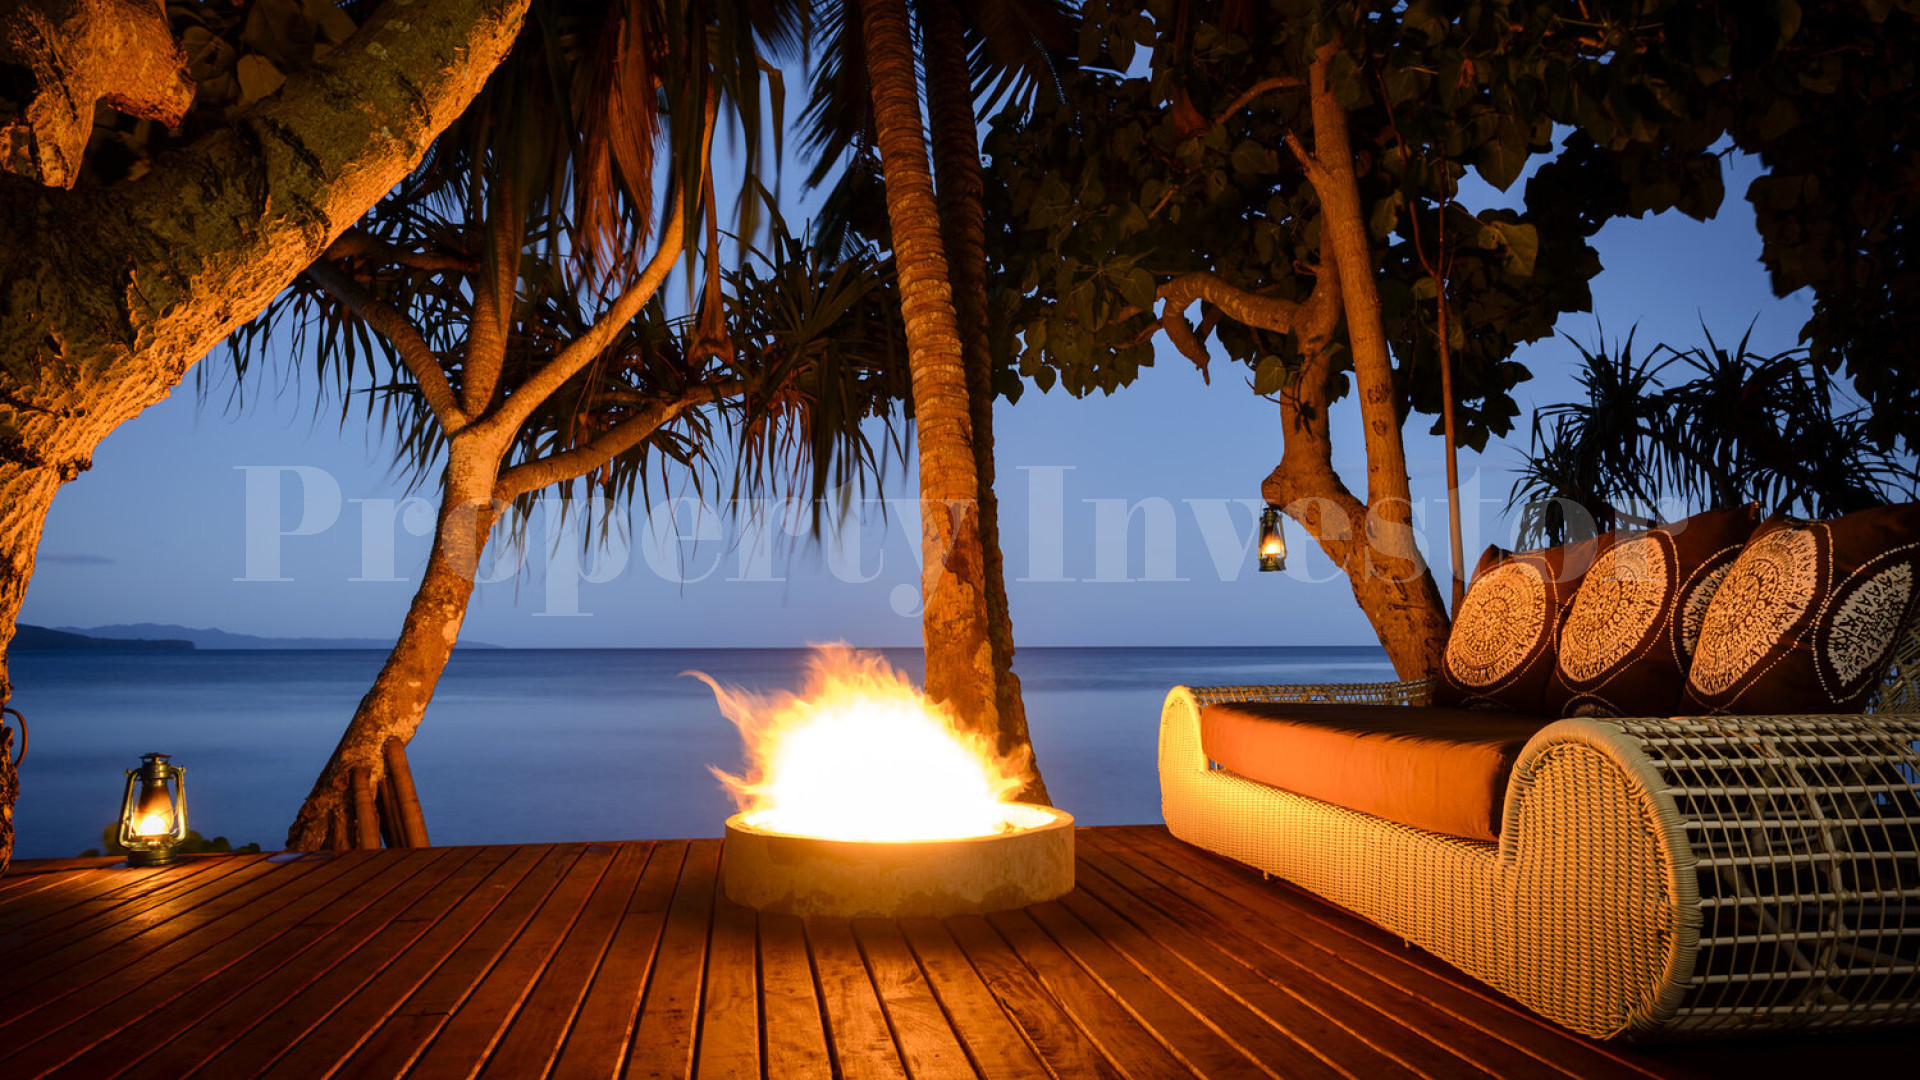 Award Winning 8 Villa Boutique Island Resort for Sale on the Rainbow Reef, Fiji